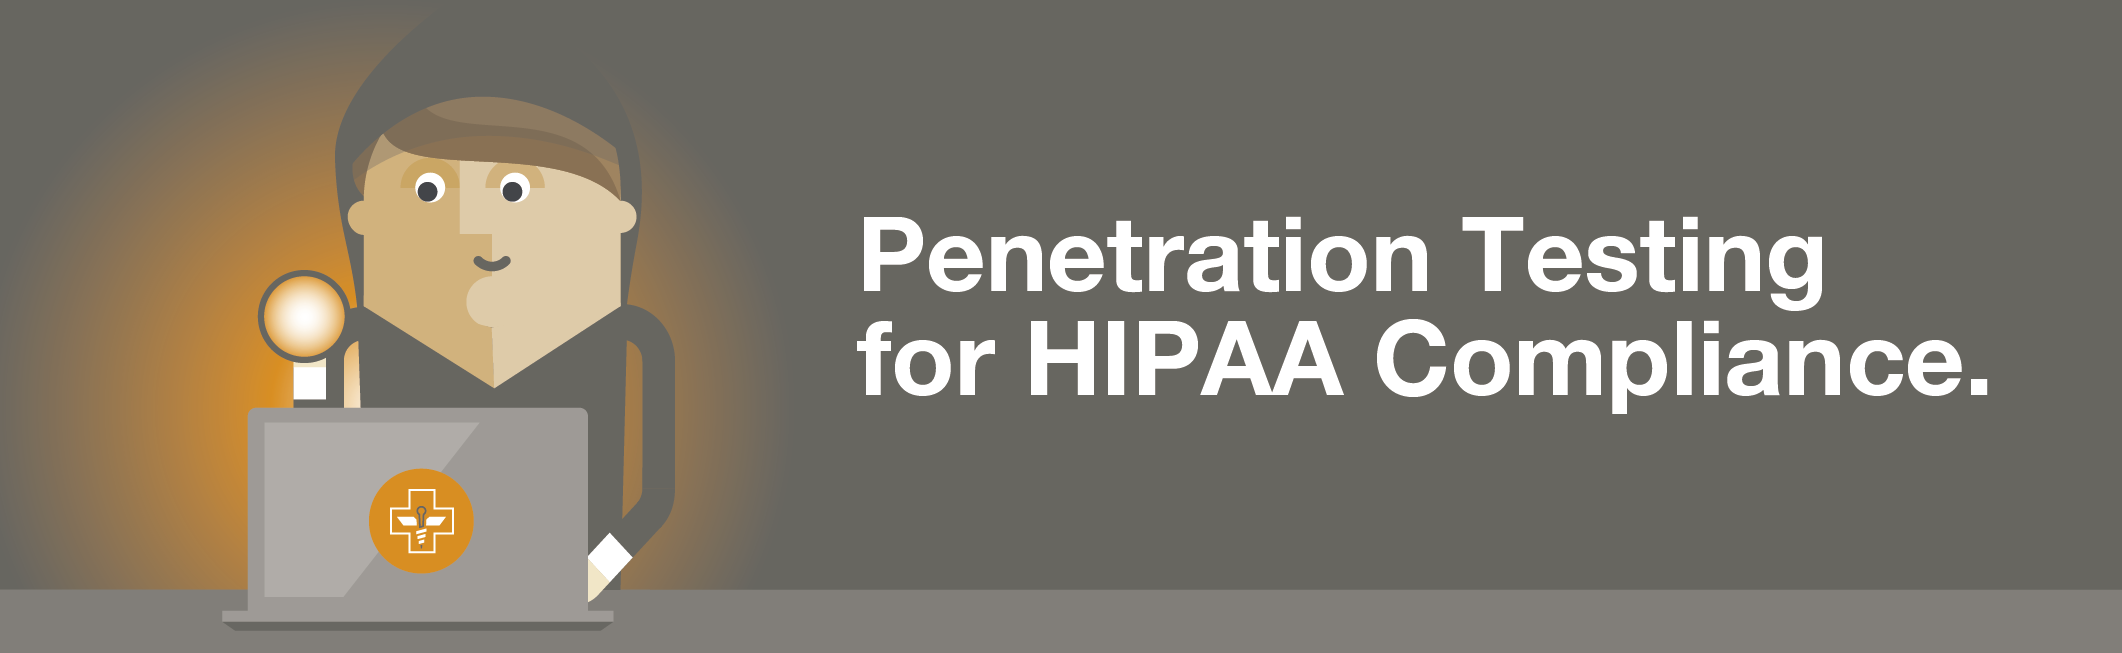 Penetration Testing for HIPAA Compliance